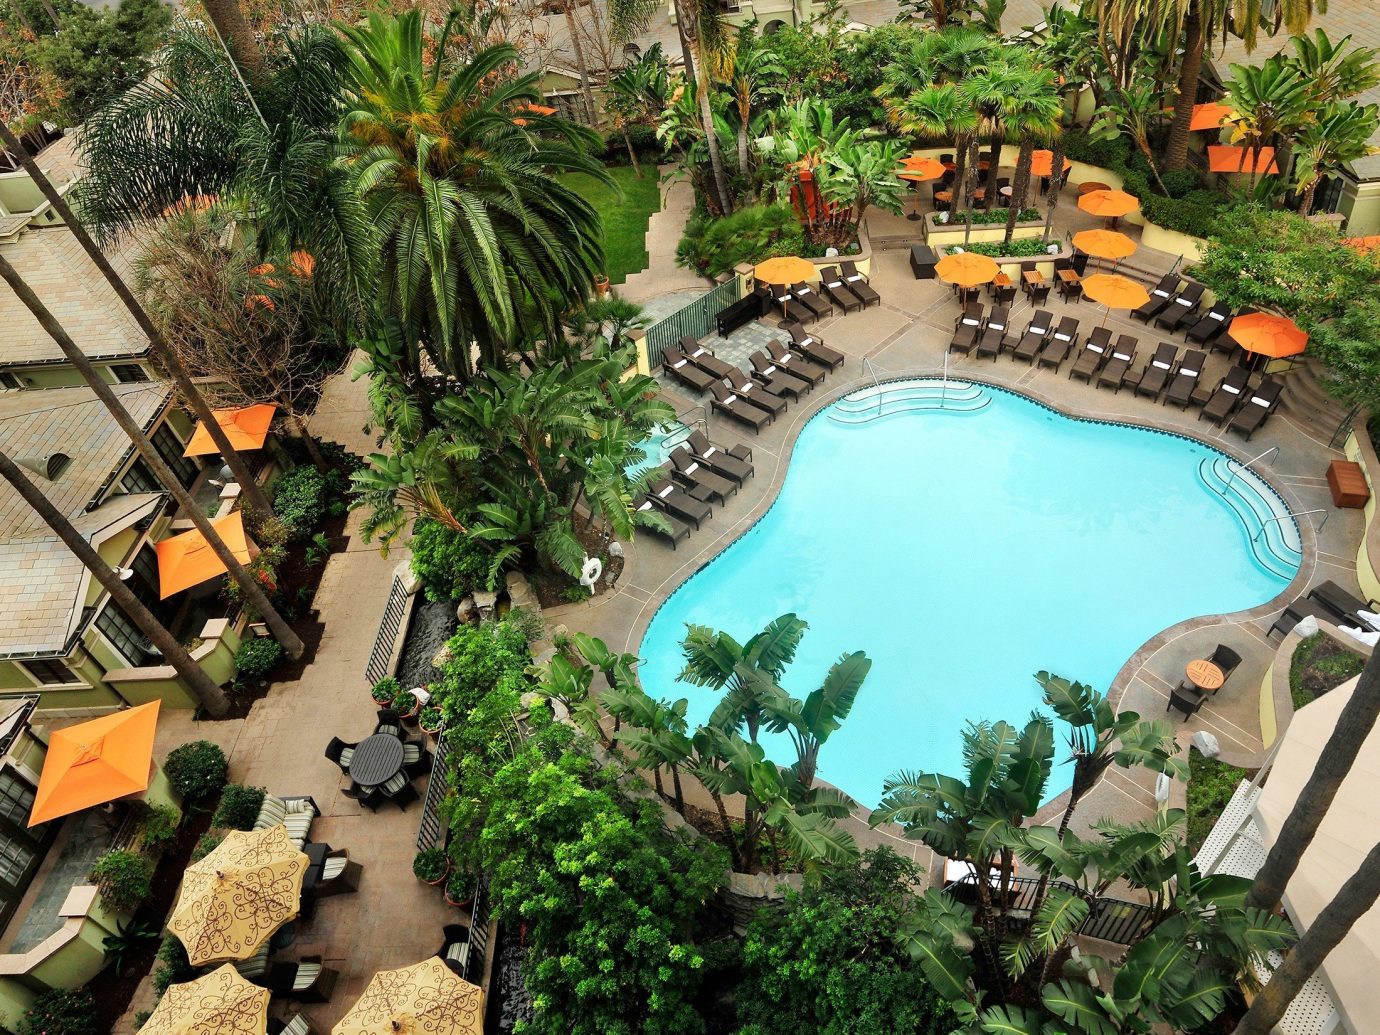 Trip Ideas tree swimming pool plant Resort estate backyard mansion Garden Jungle decorated